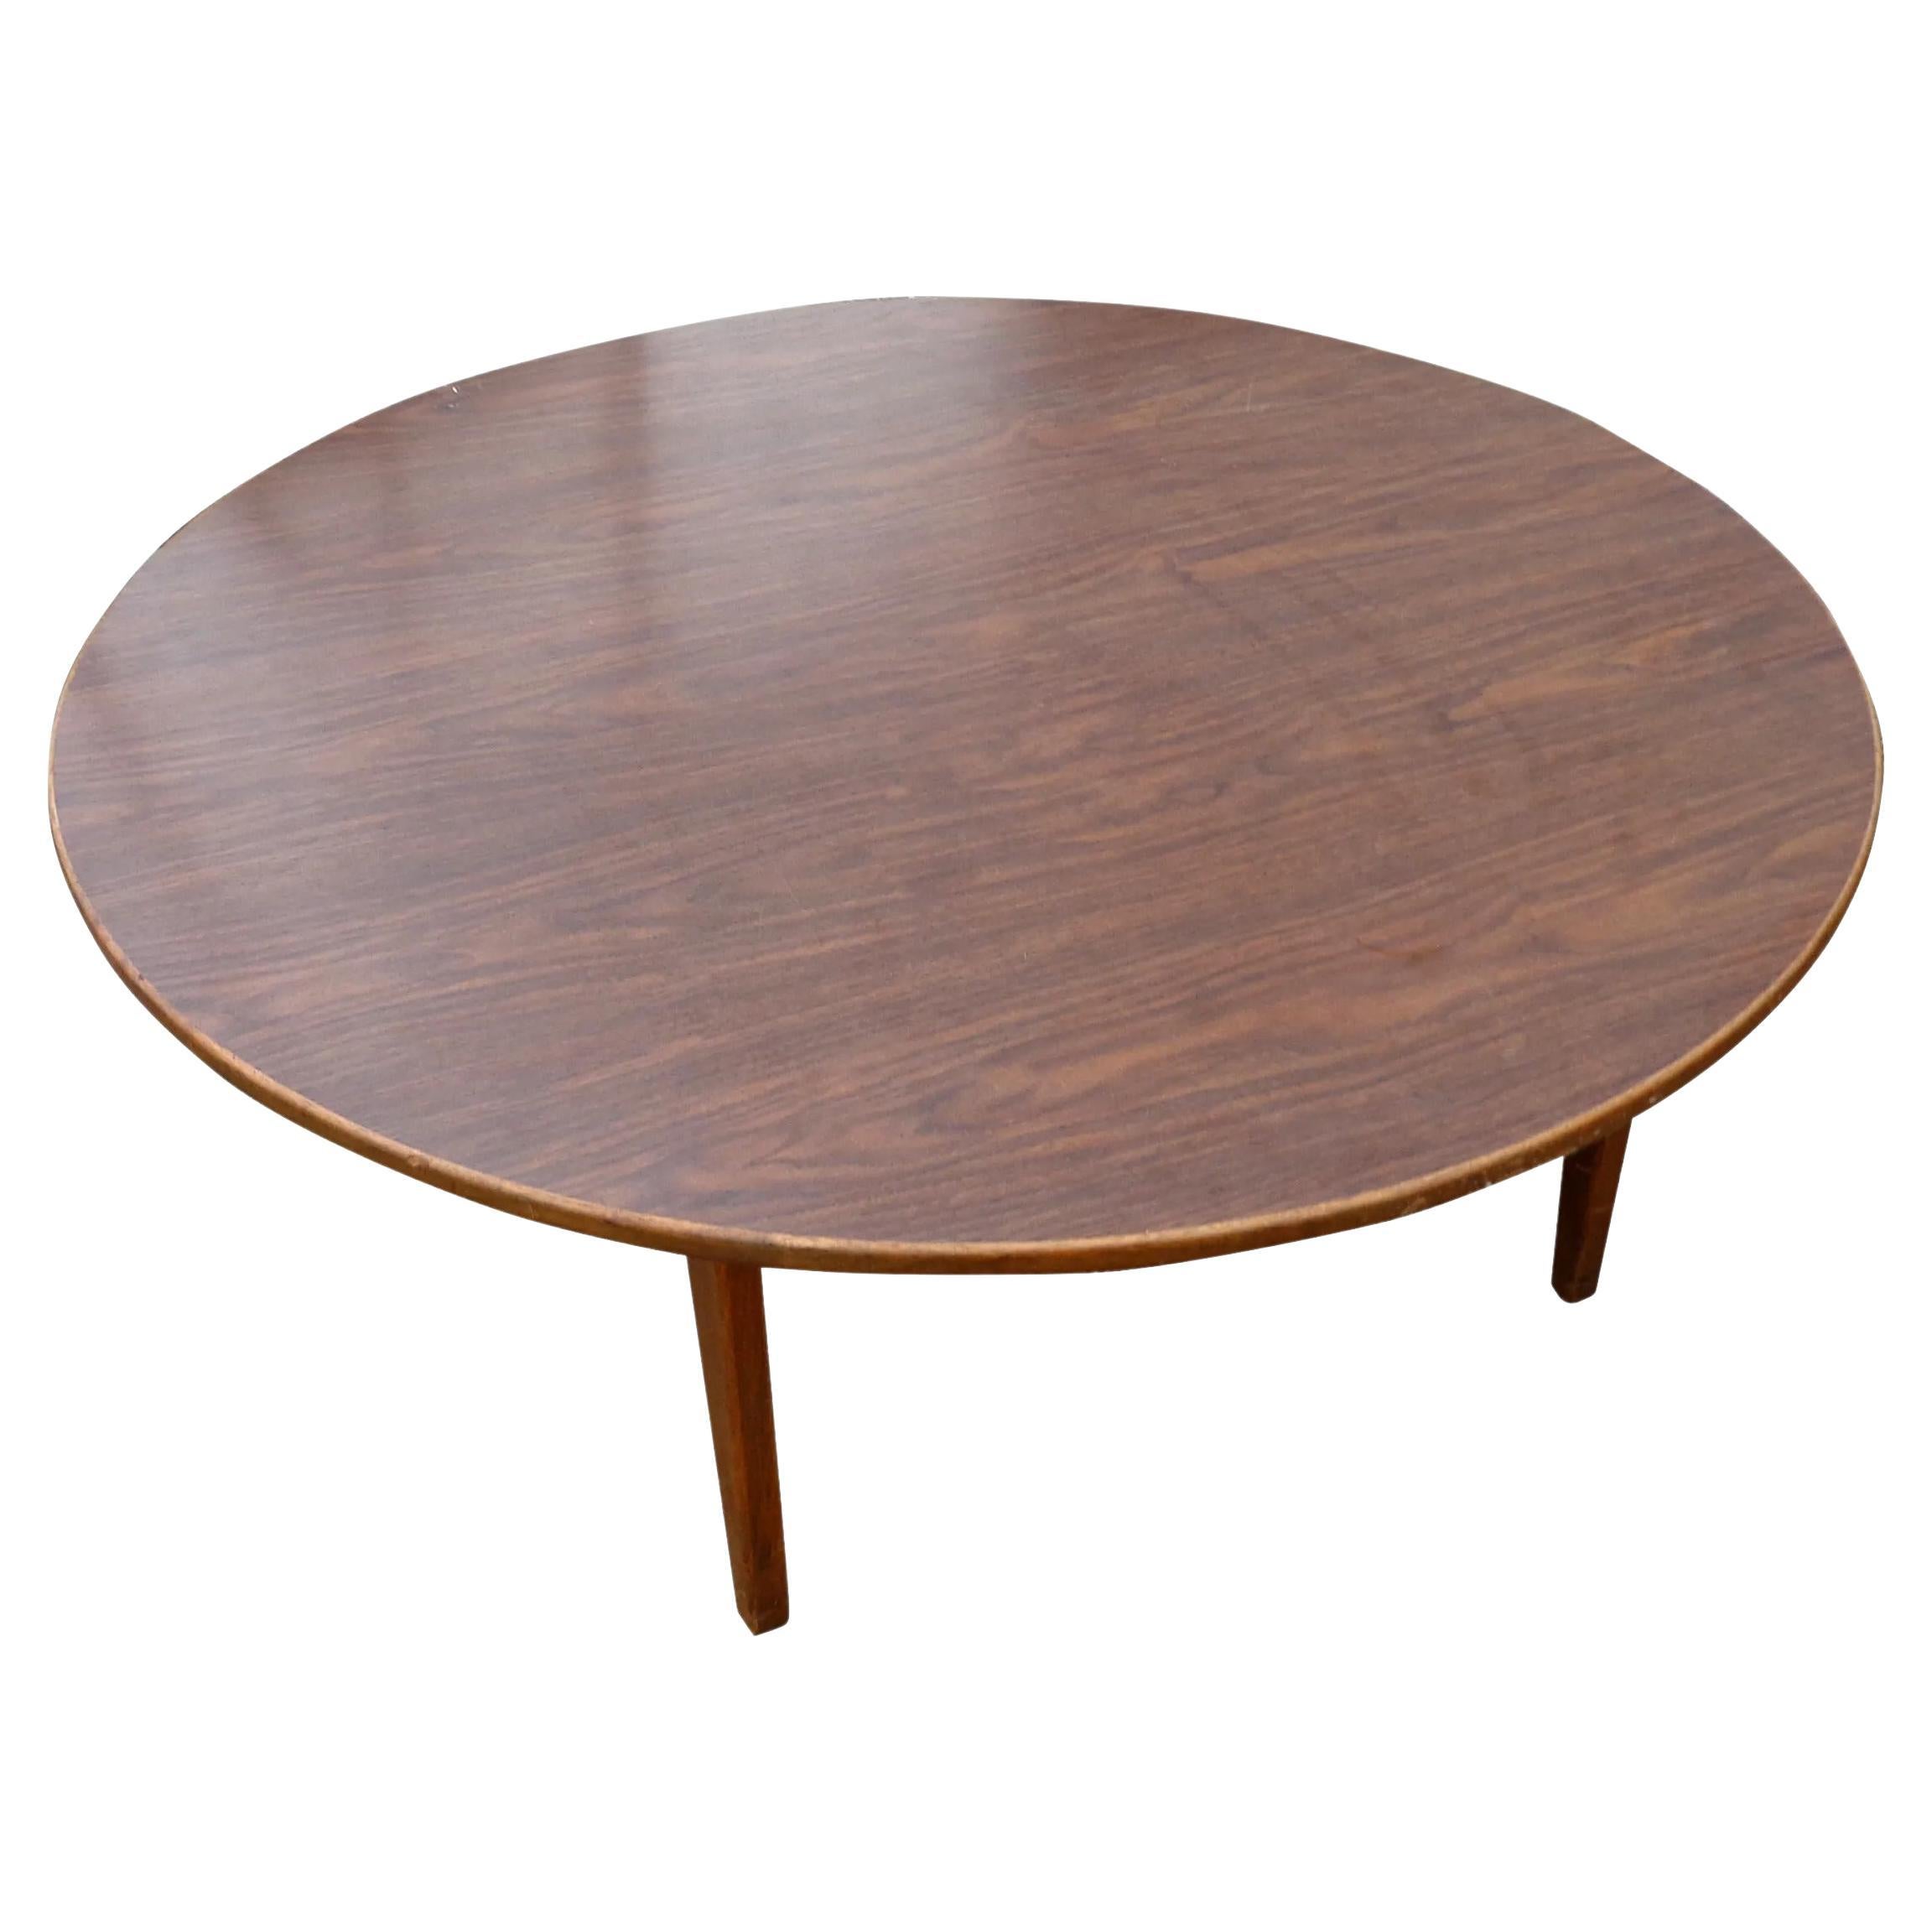 40? Mid-century Jen Rison walnut coffee table.


Jens Risom coffee table in walnut laminate. Round top with square sculptural base. Original Jens Risom Design Inc. label on bottom.